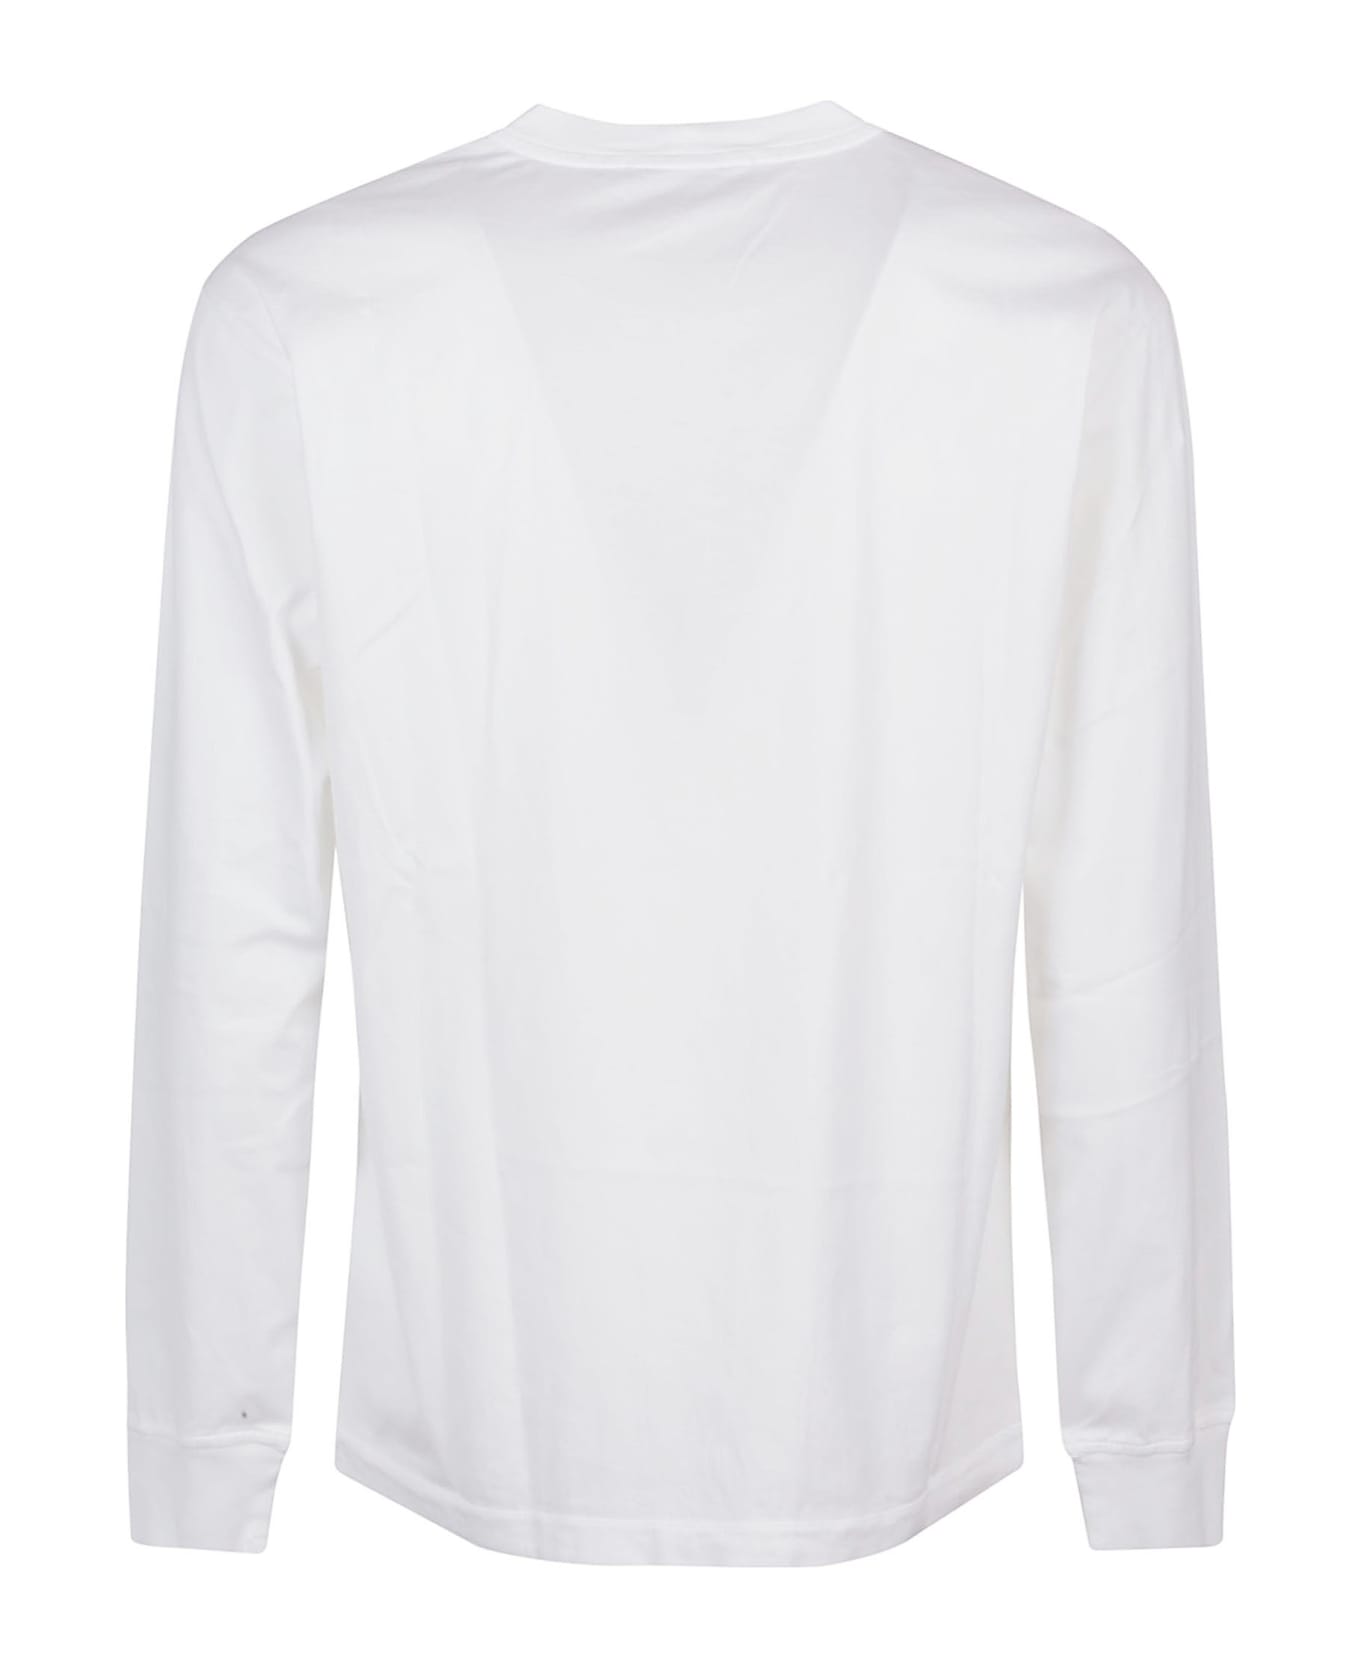 Stone Island Long Sleeve T-shirt - White シャツ